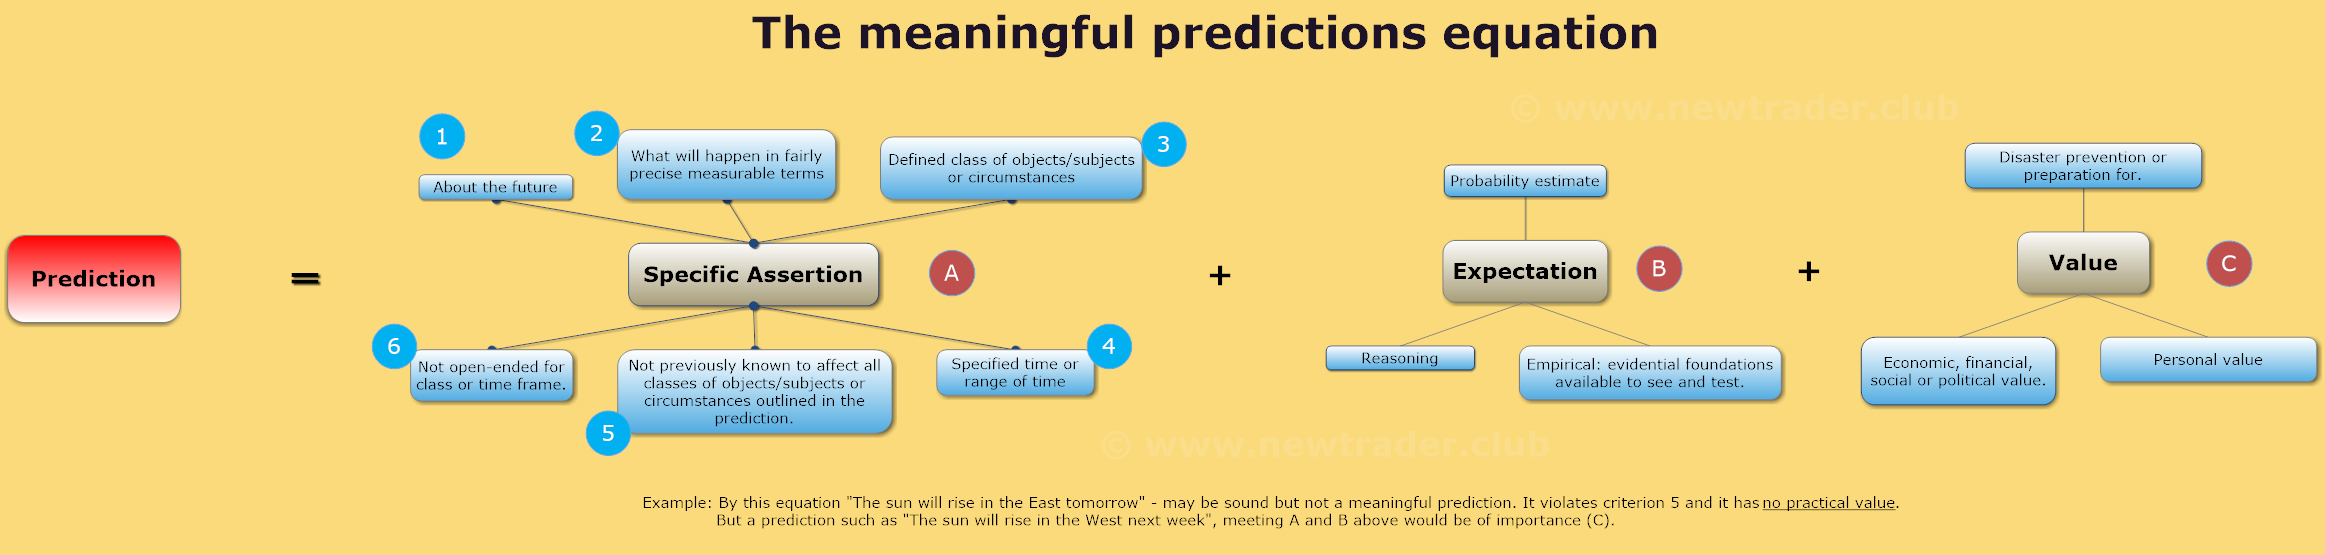 2016_05_16_the_prediction_equation